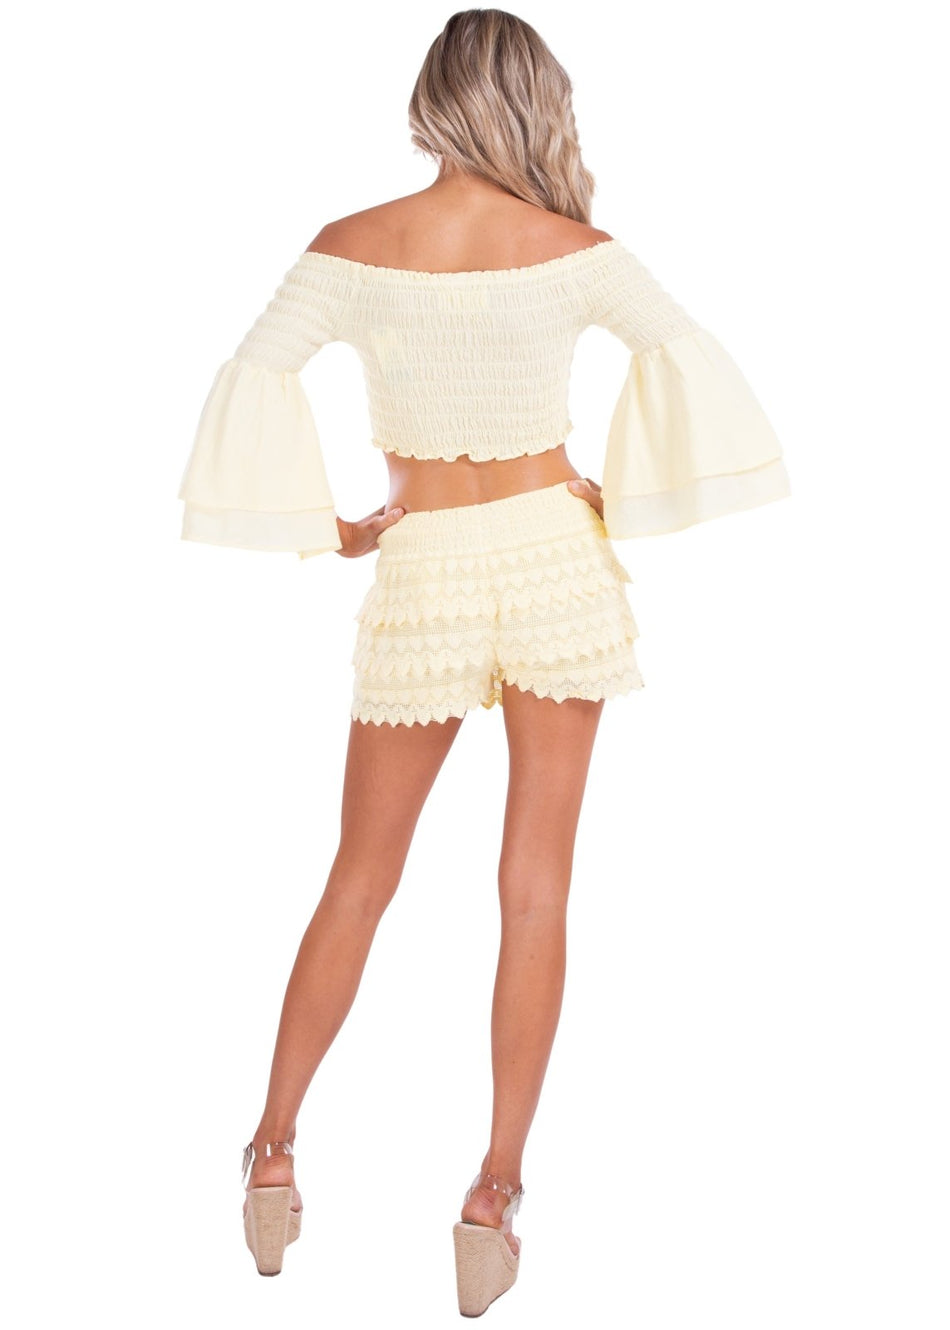 100% Cotton 'Polly' Tiered Crochet Skort Baby Yellow - Seaspice Resort Wear